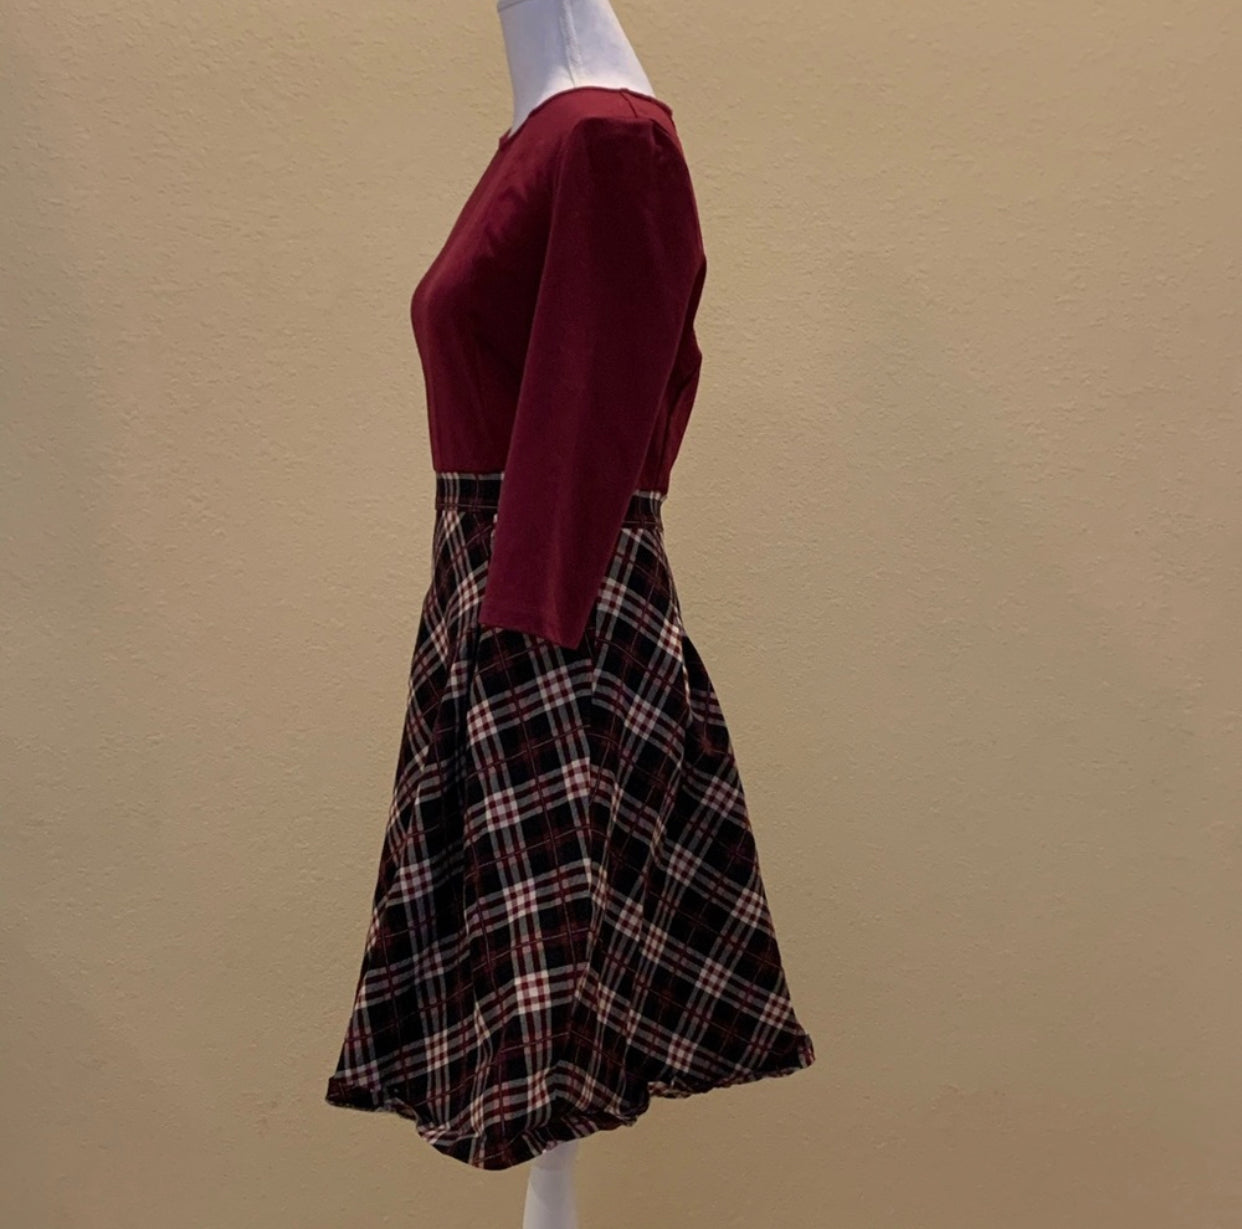 Miusol Retro Inspired Plaid Dress, Size Medium (US Size 8)